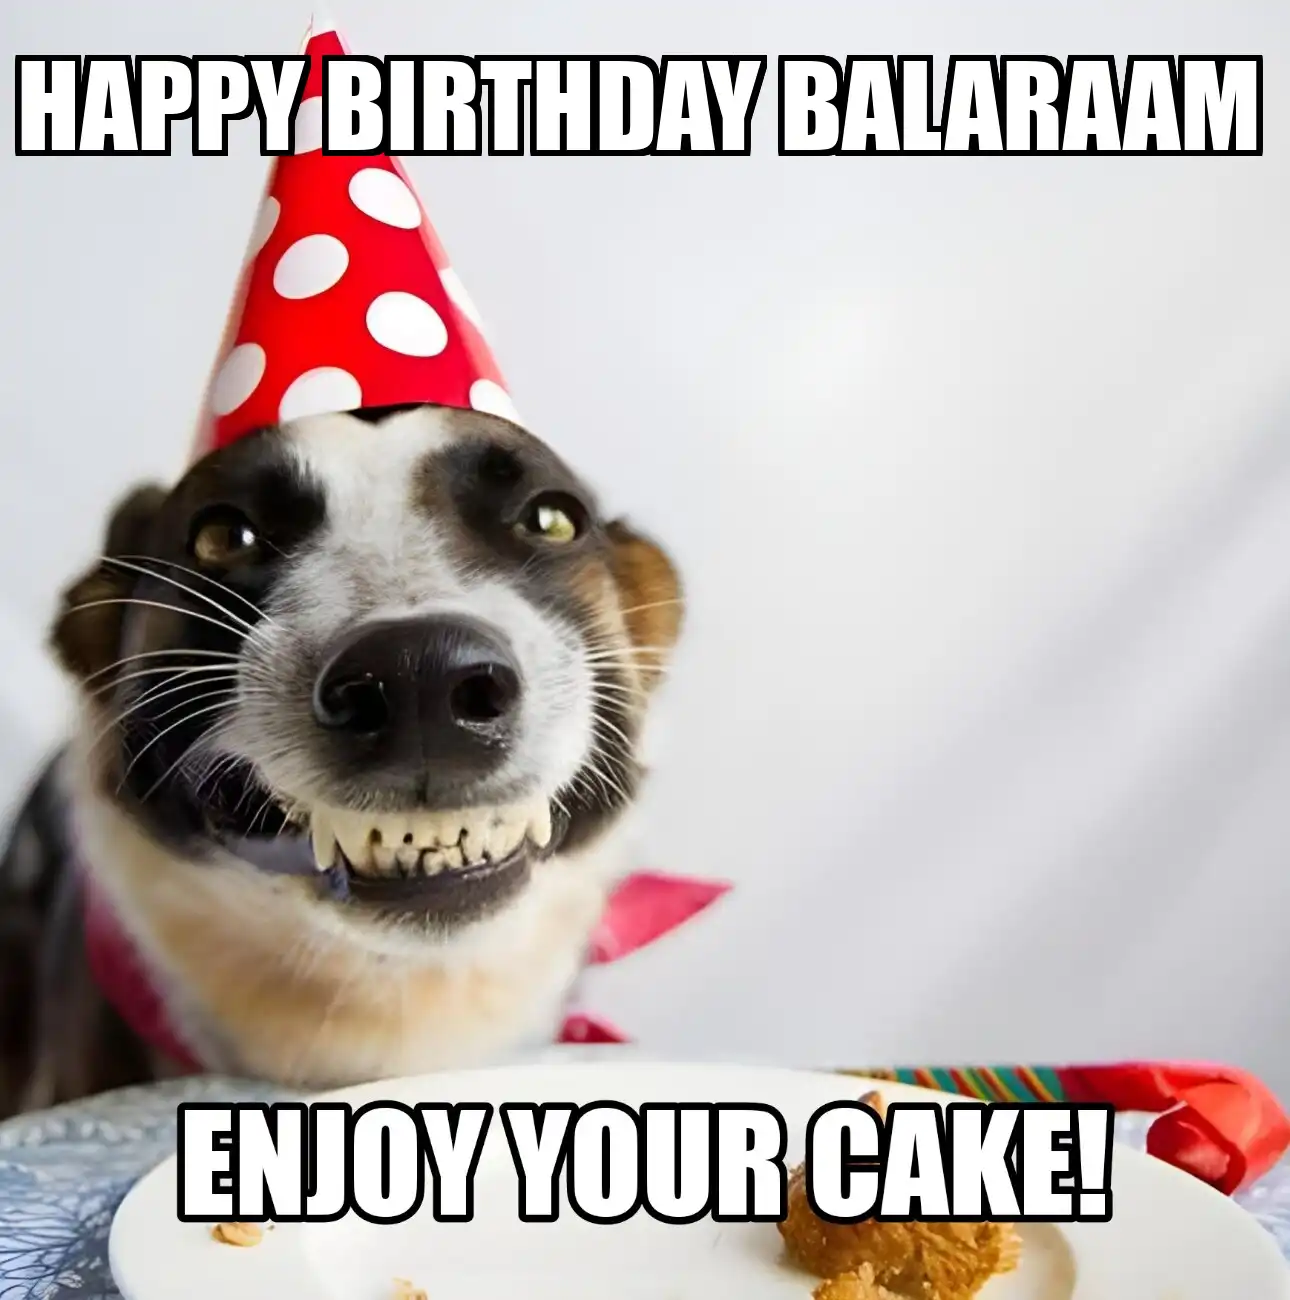 Happy Birthday Balaraam Enjoy Your Cake Dog Meme